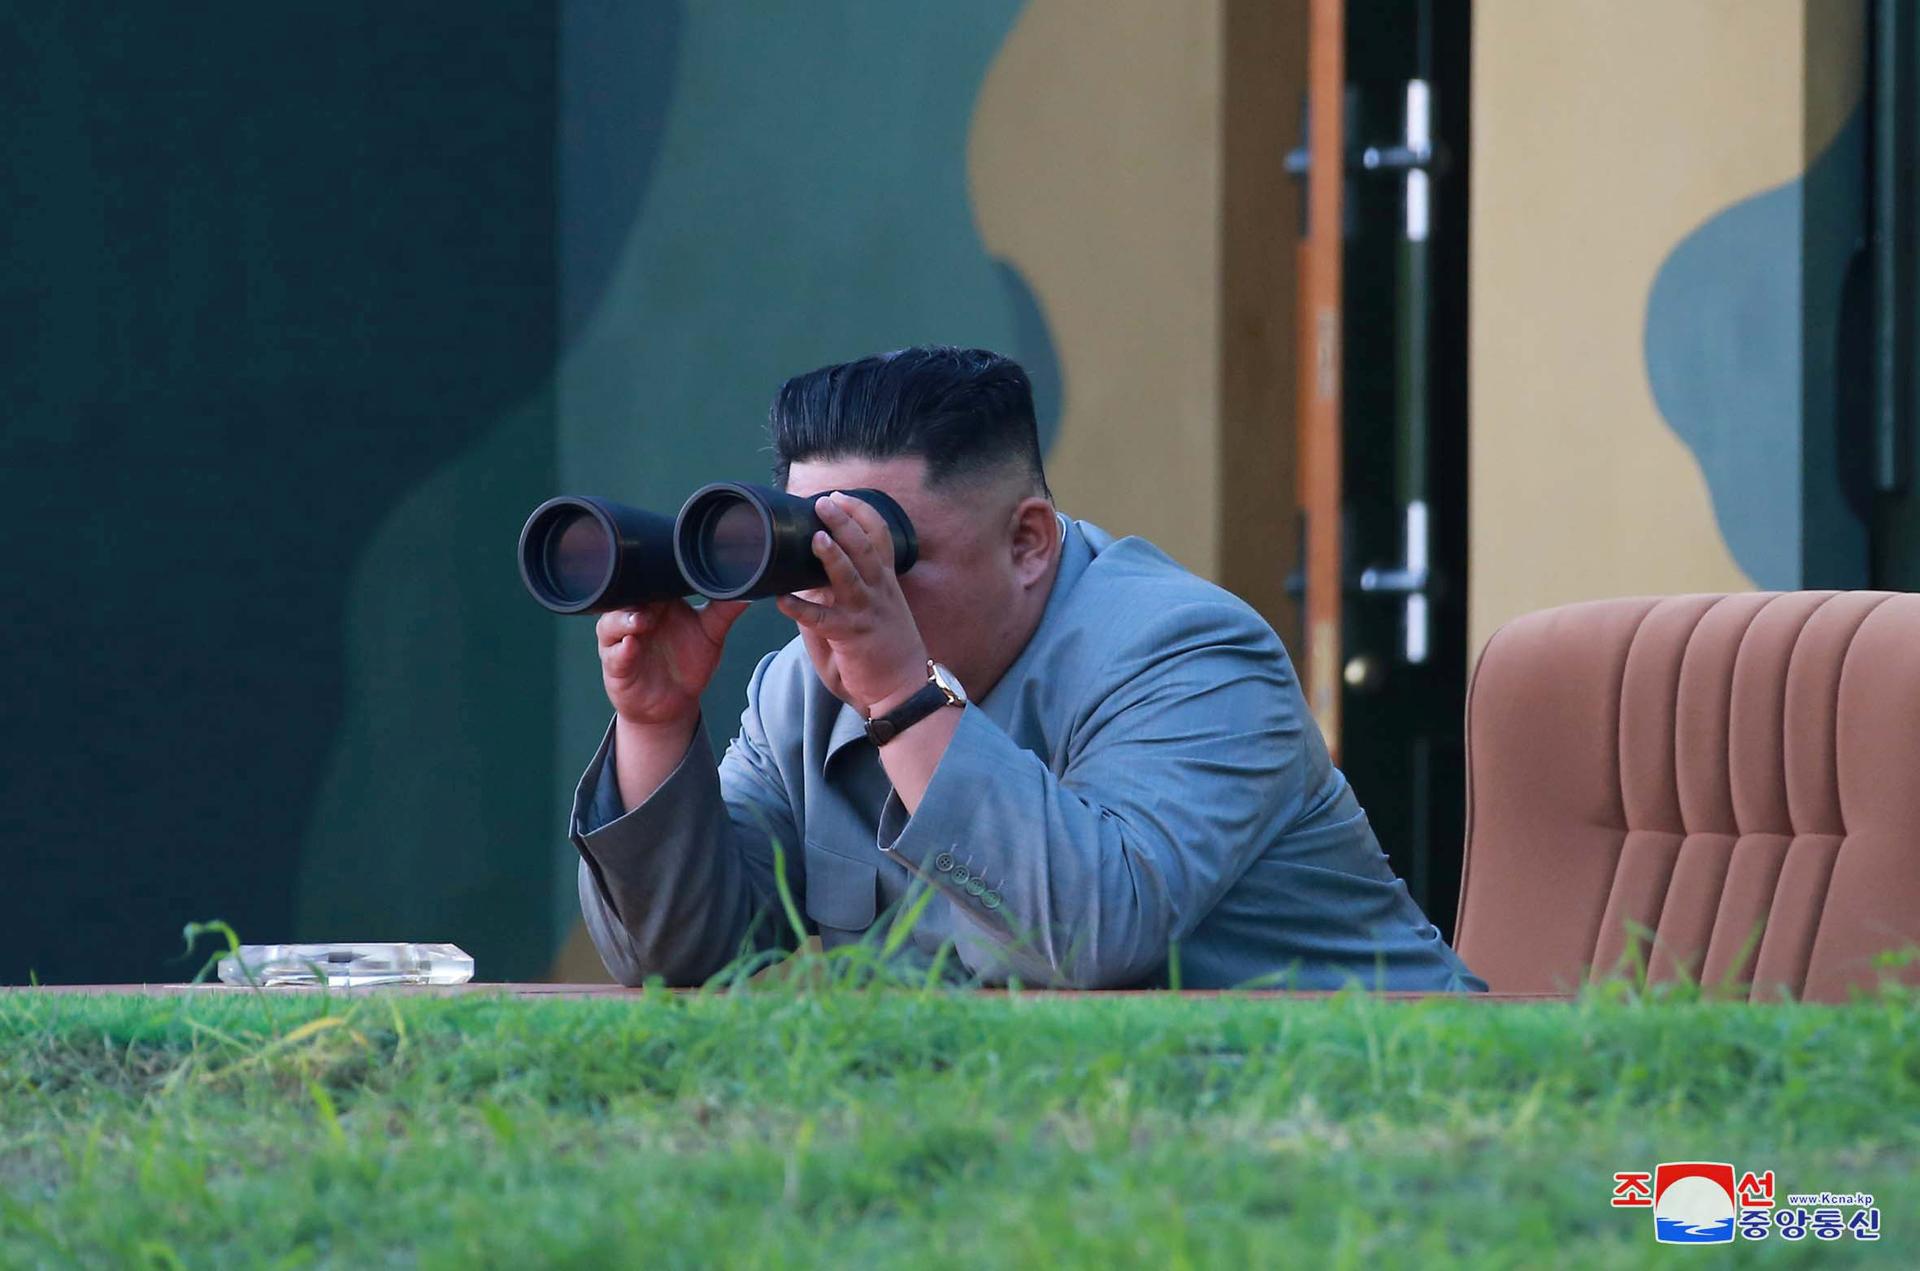 Kim Jong-un looks through binoculars and leans over a ledge